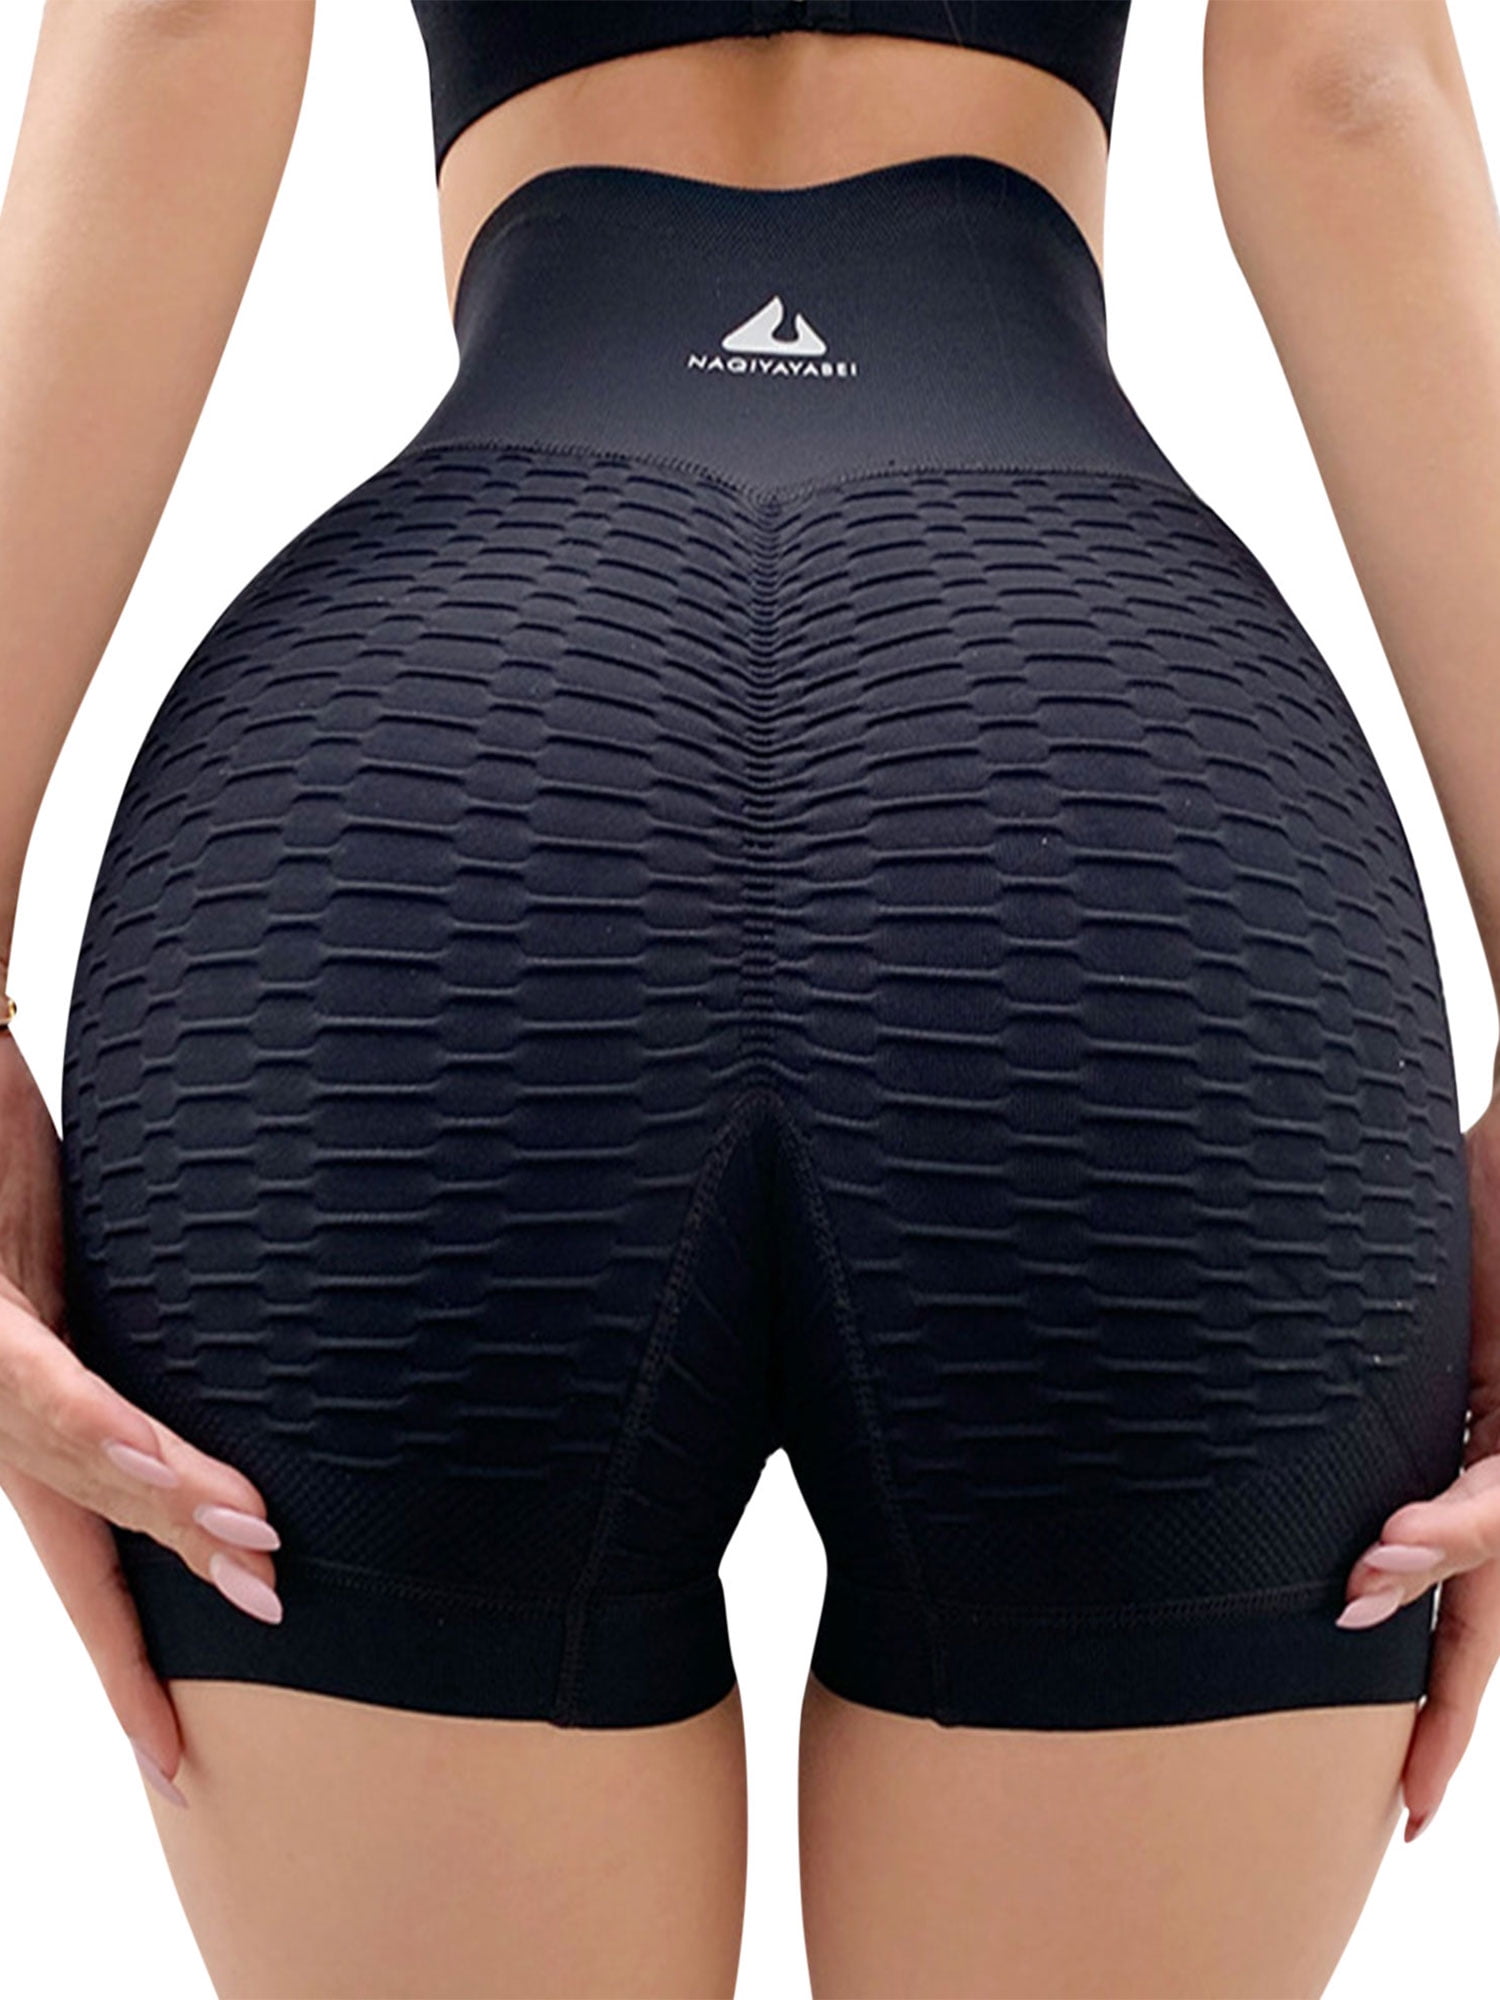 Laibory Womens Sports Shorts Fashion Print Hip Bubble Mesh Short Yoga Pants Tight High Waist Elastic Casual Athletic Pants 